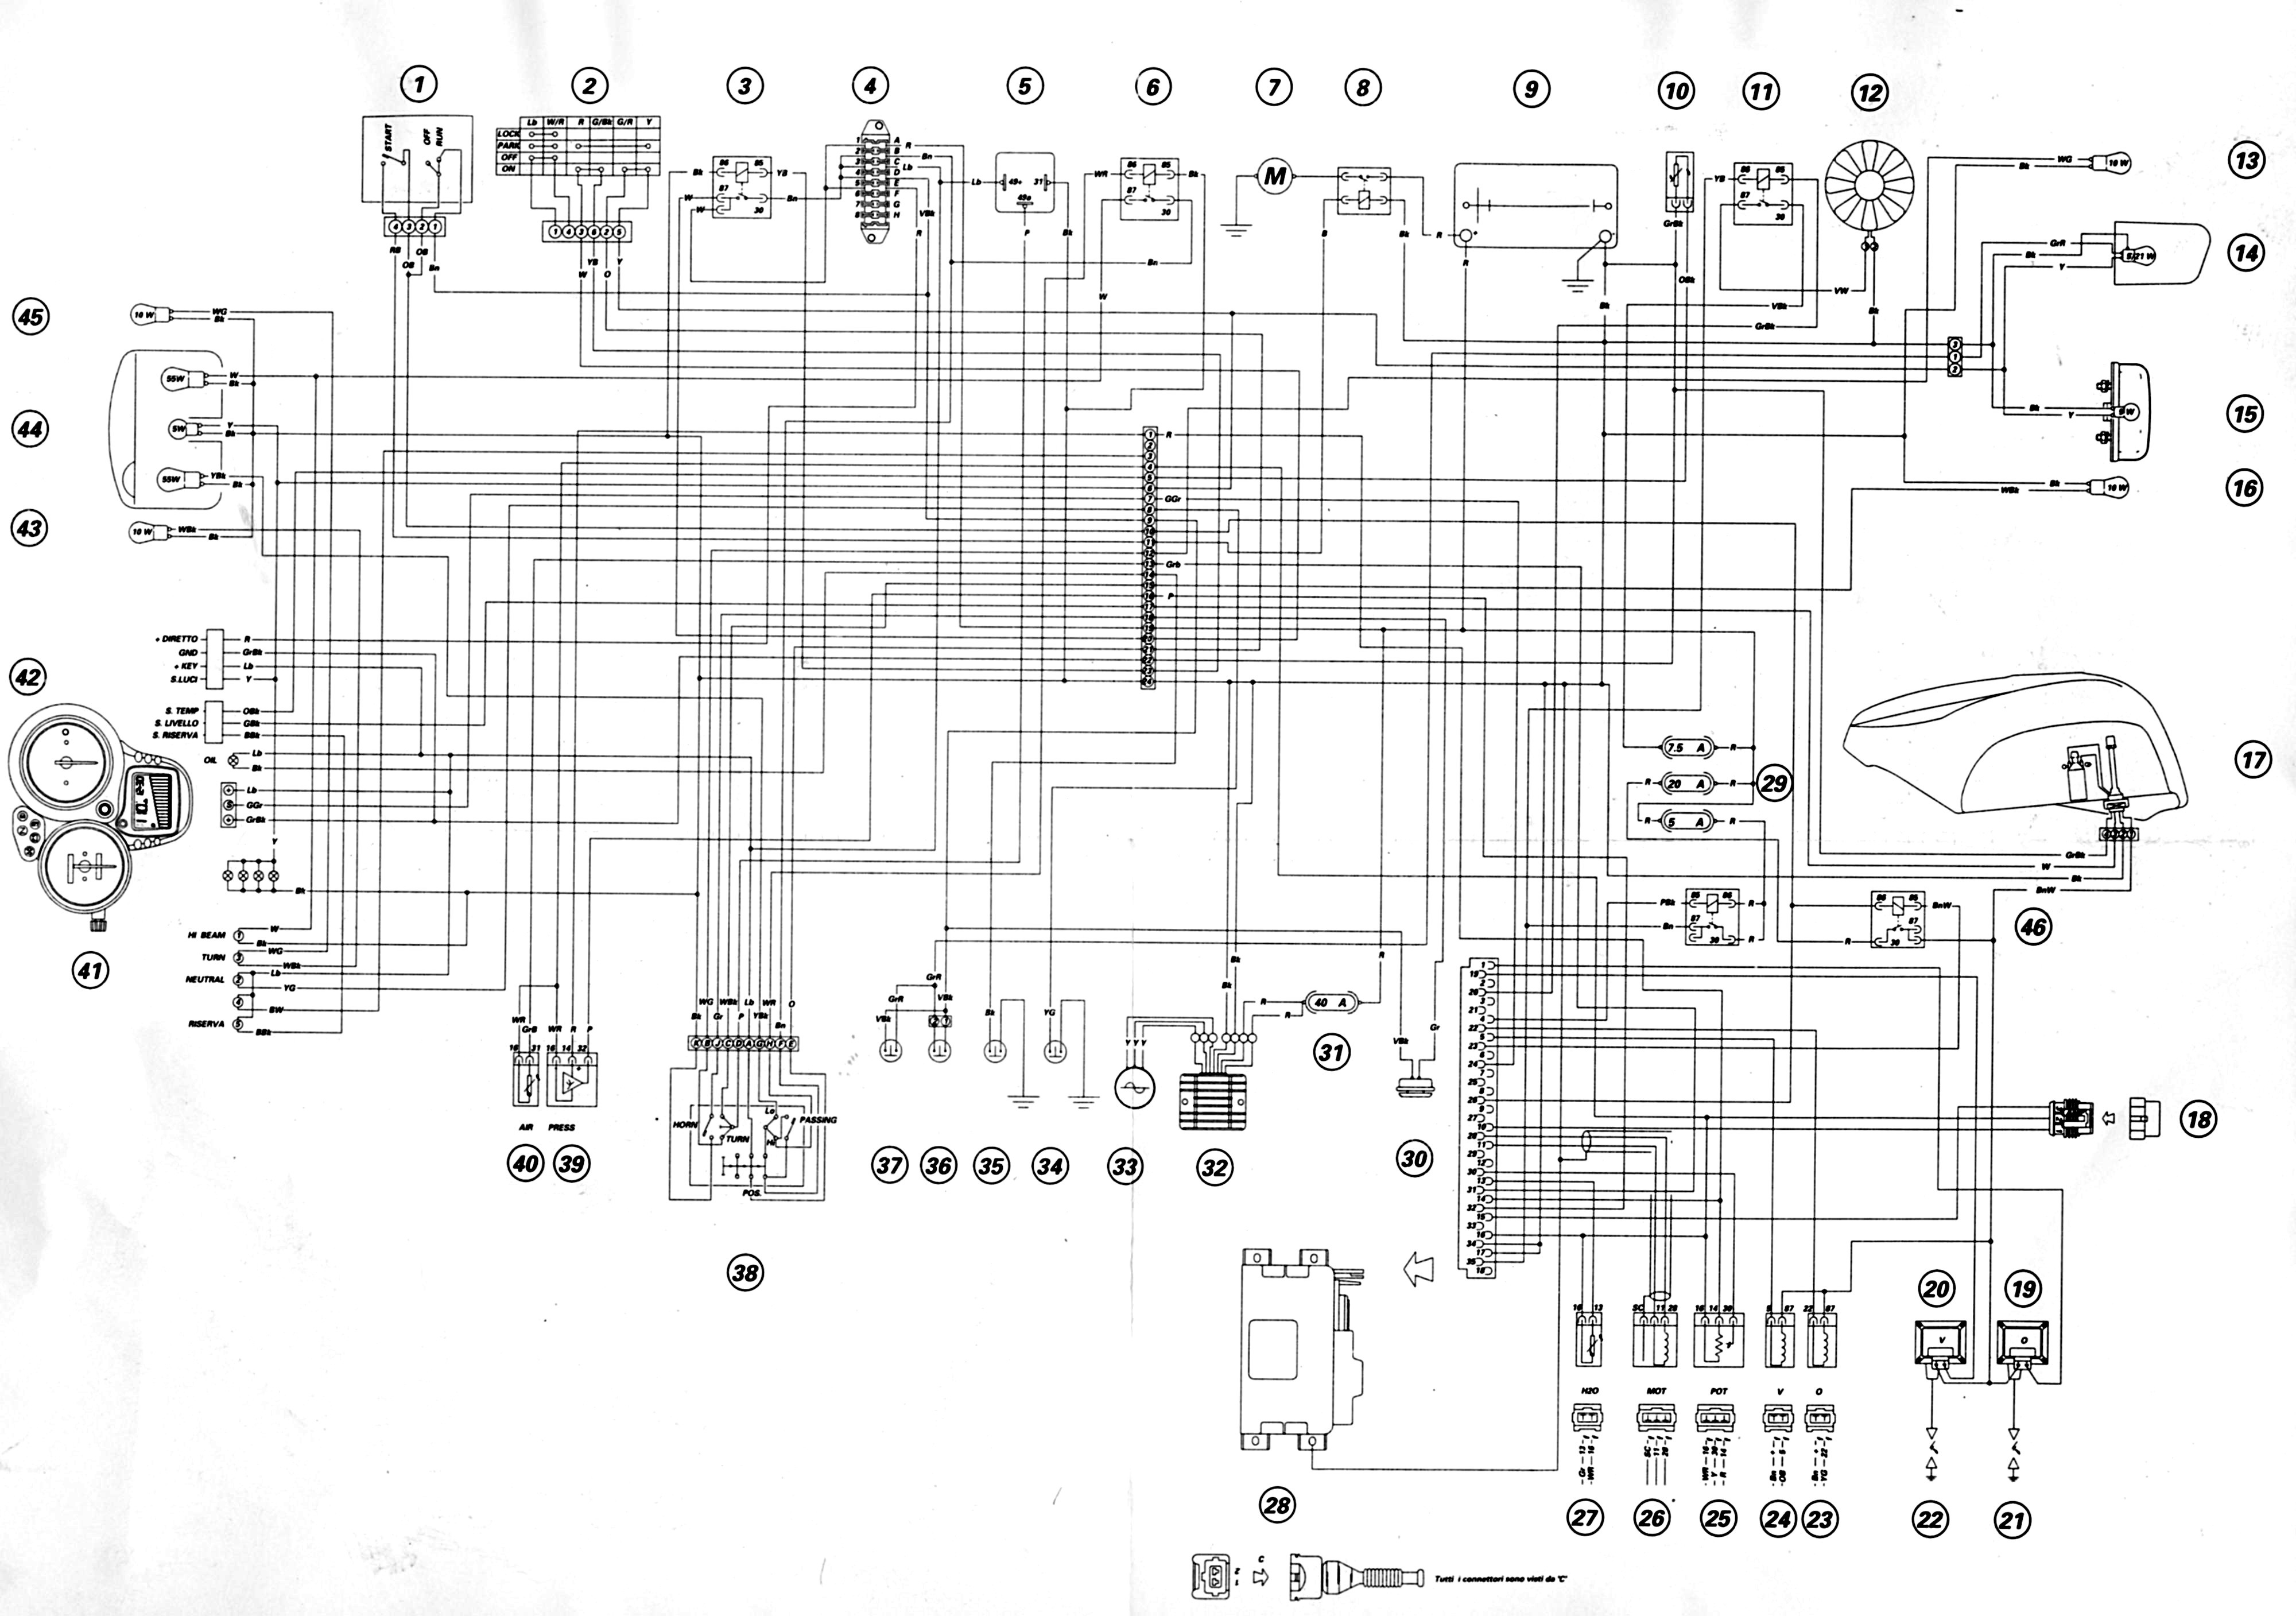 2002 Gsxr 1000 Wiring Diagram Electrical Wiring Diagrams Subwoofer Diagram Dual Ohm Speedometer Of 2002 Gsxr 1000 Wiring Diagram